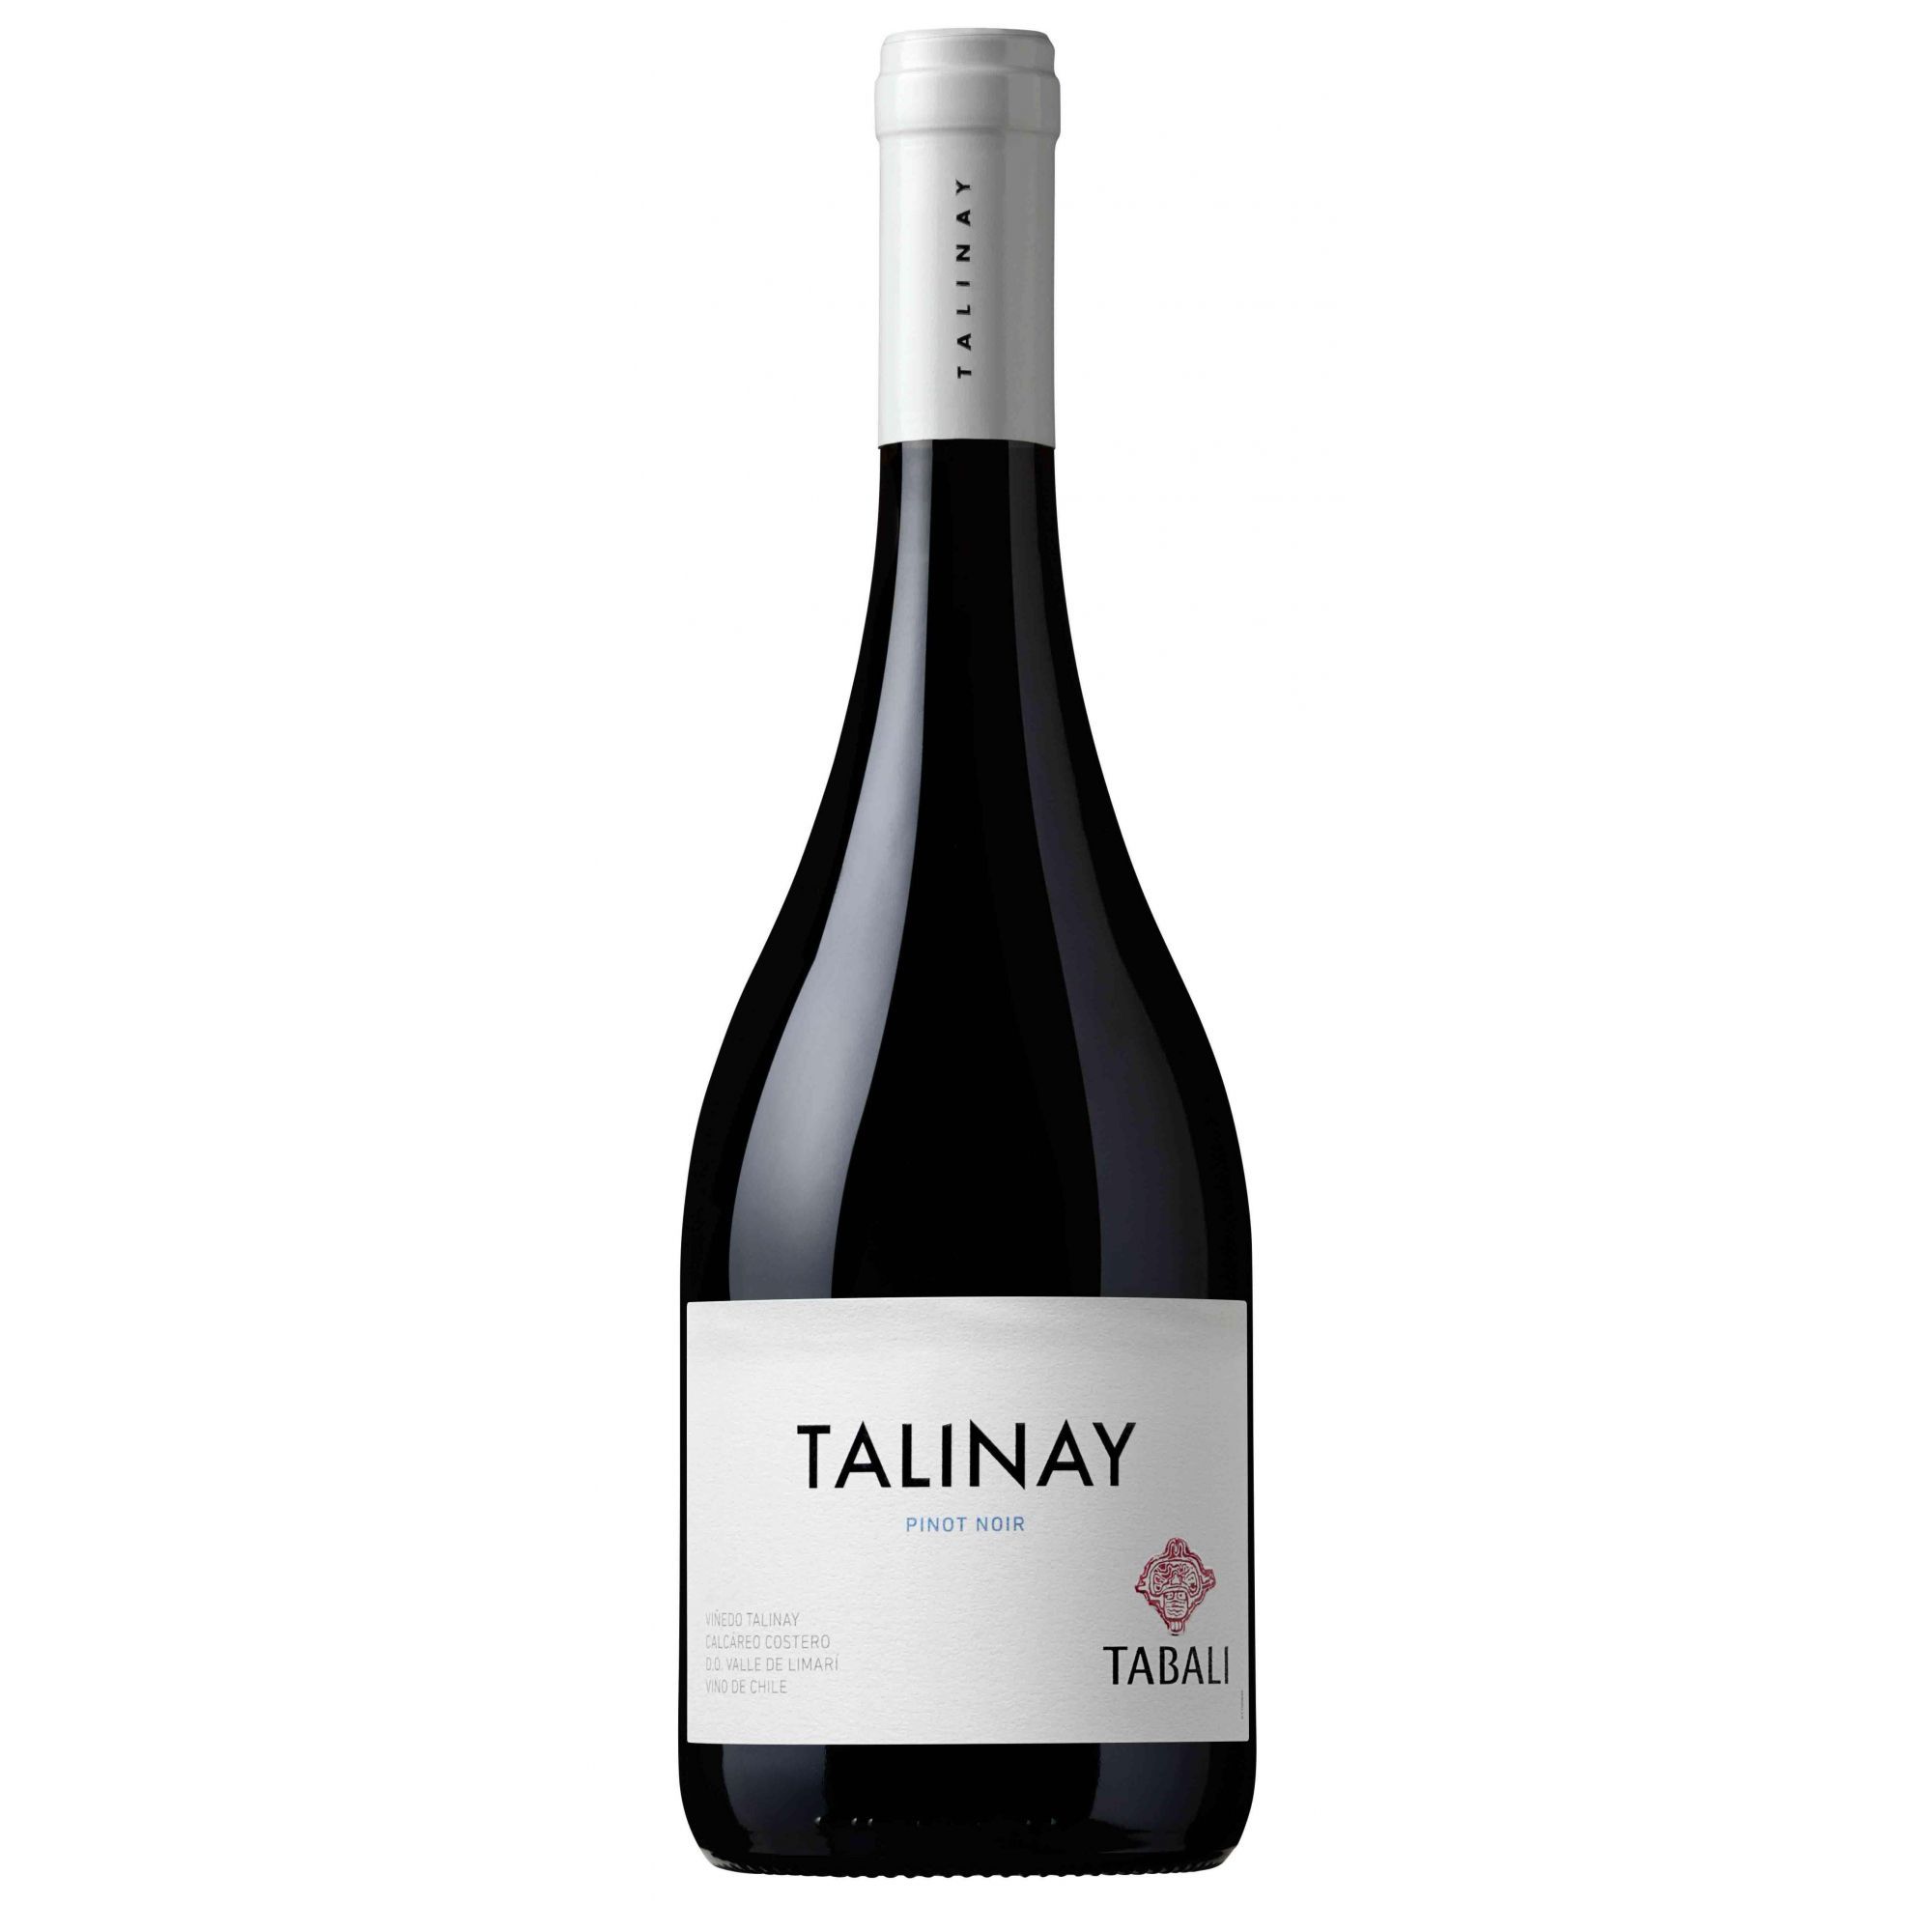 Vinho Talinay Pinot Noir 2015